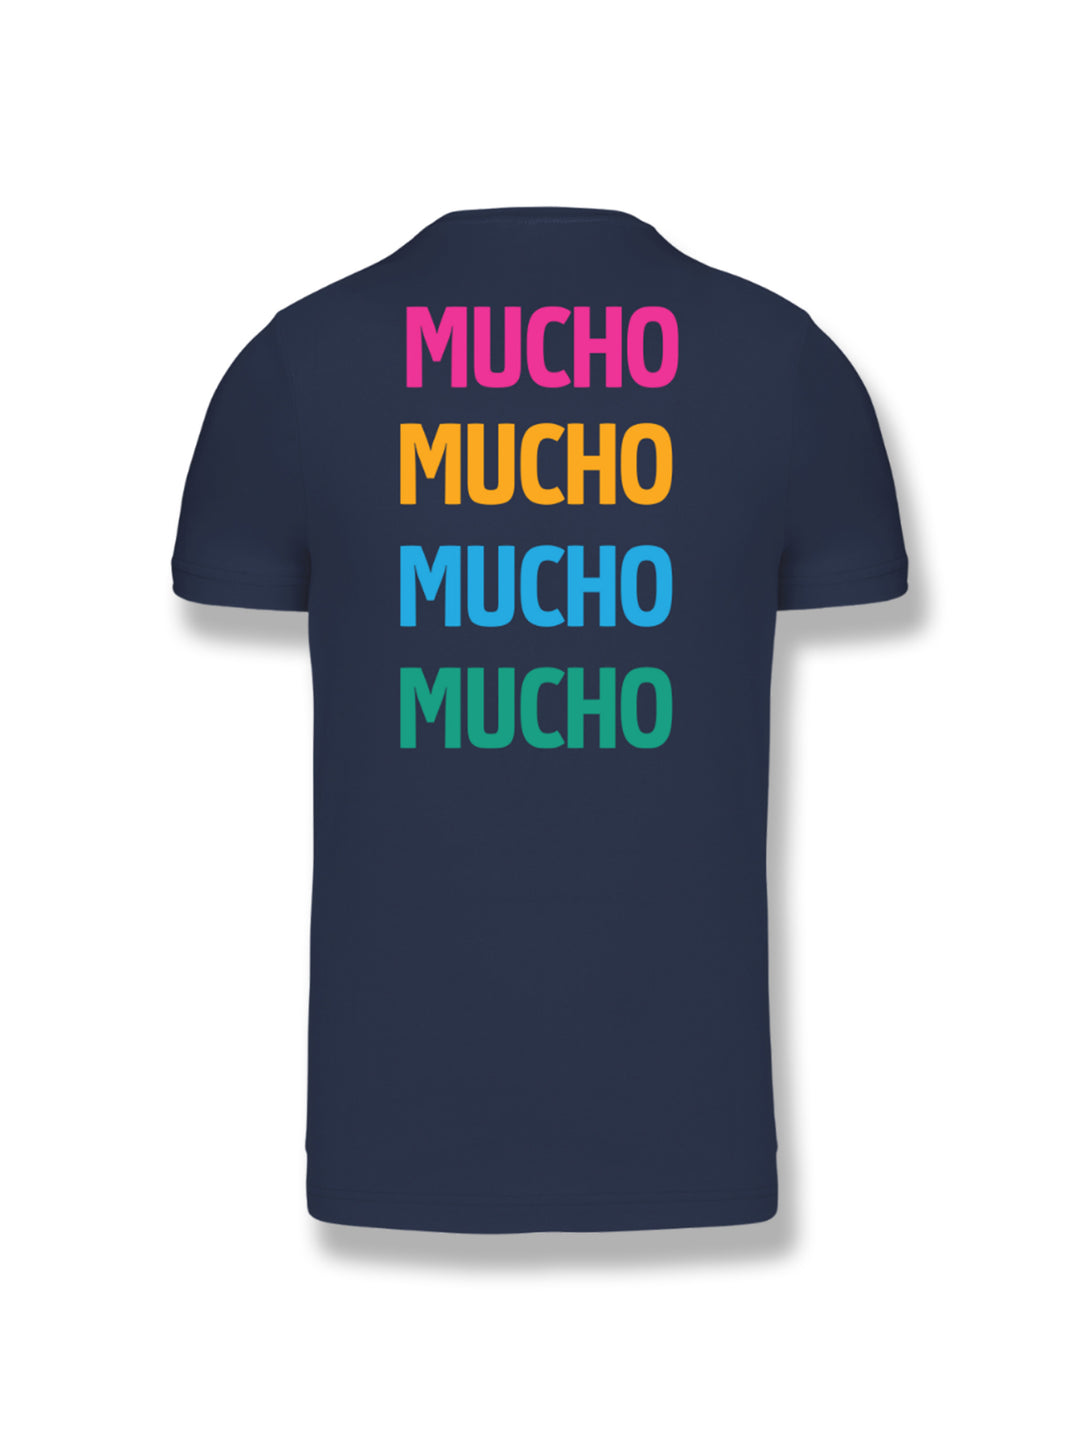 T-Shirt Coton Ville - Dos Mucho - Homme